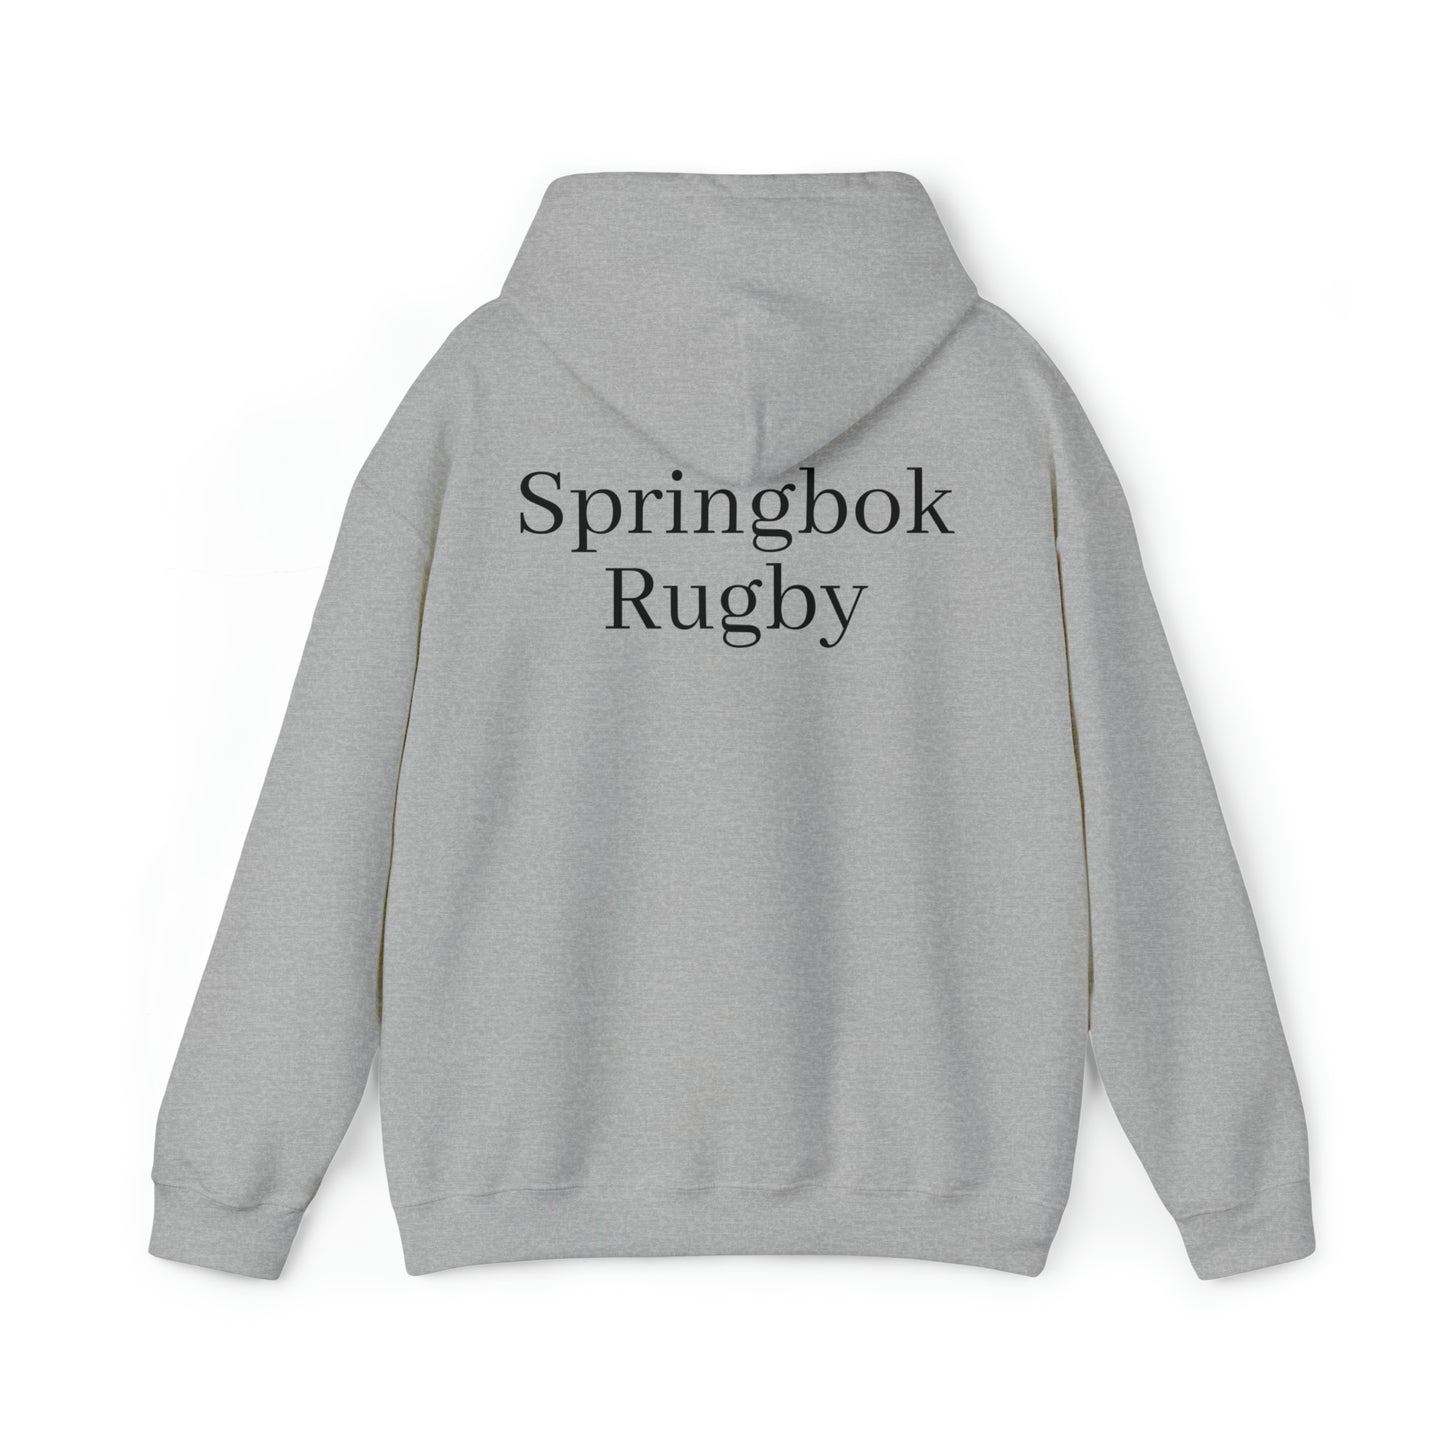 Springbok RWC photoshoot - light hoodies